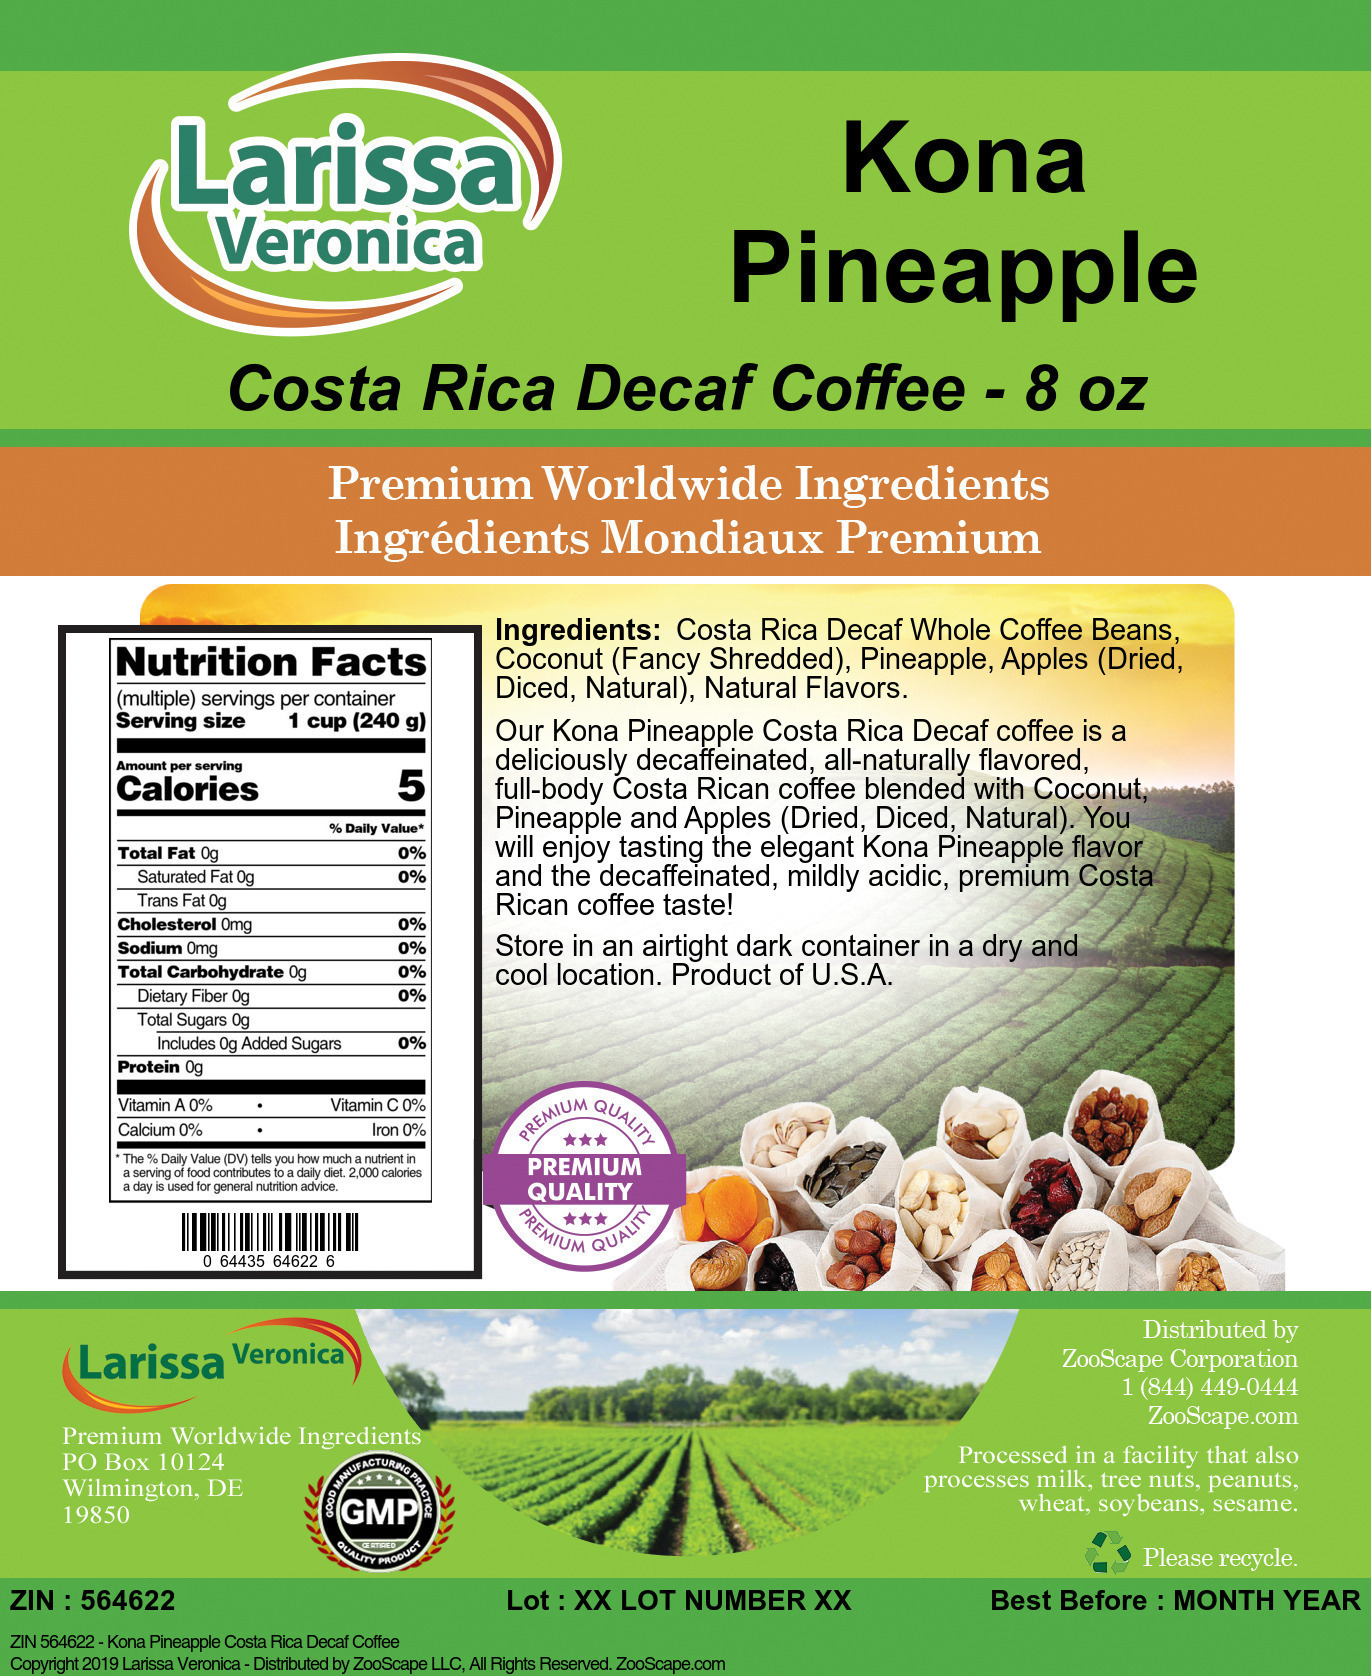 Kona Pineapple Costa Rica Decaf Coffee - Label